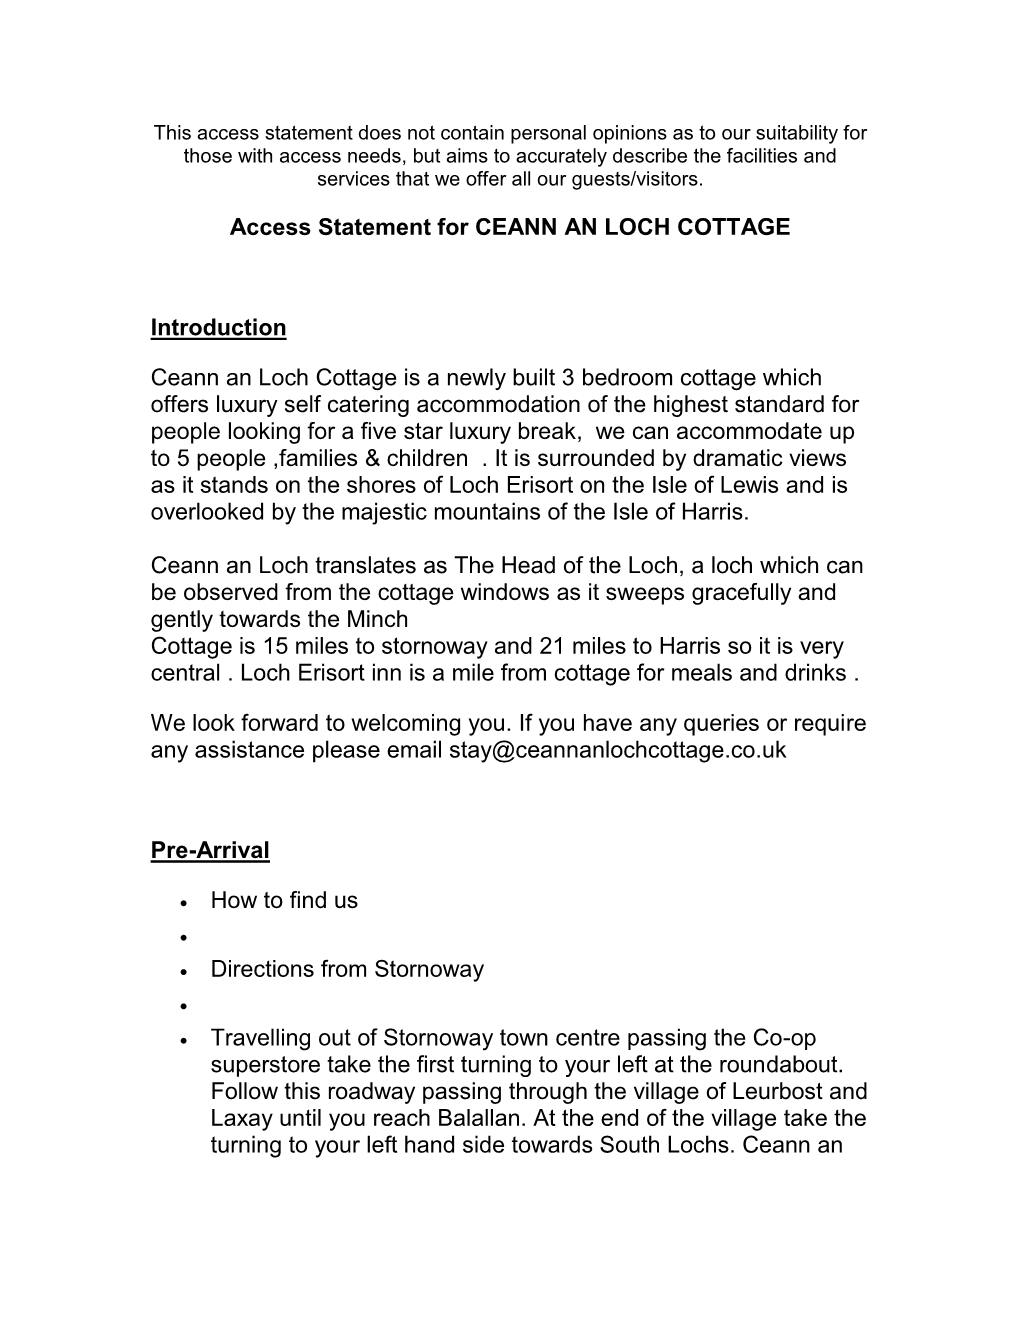 Access Statement for CEANN an LOCH COTTAGE